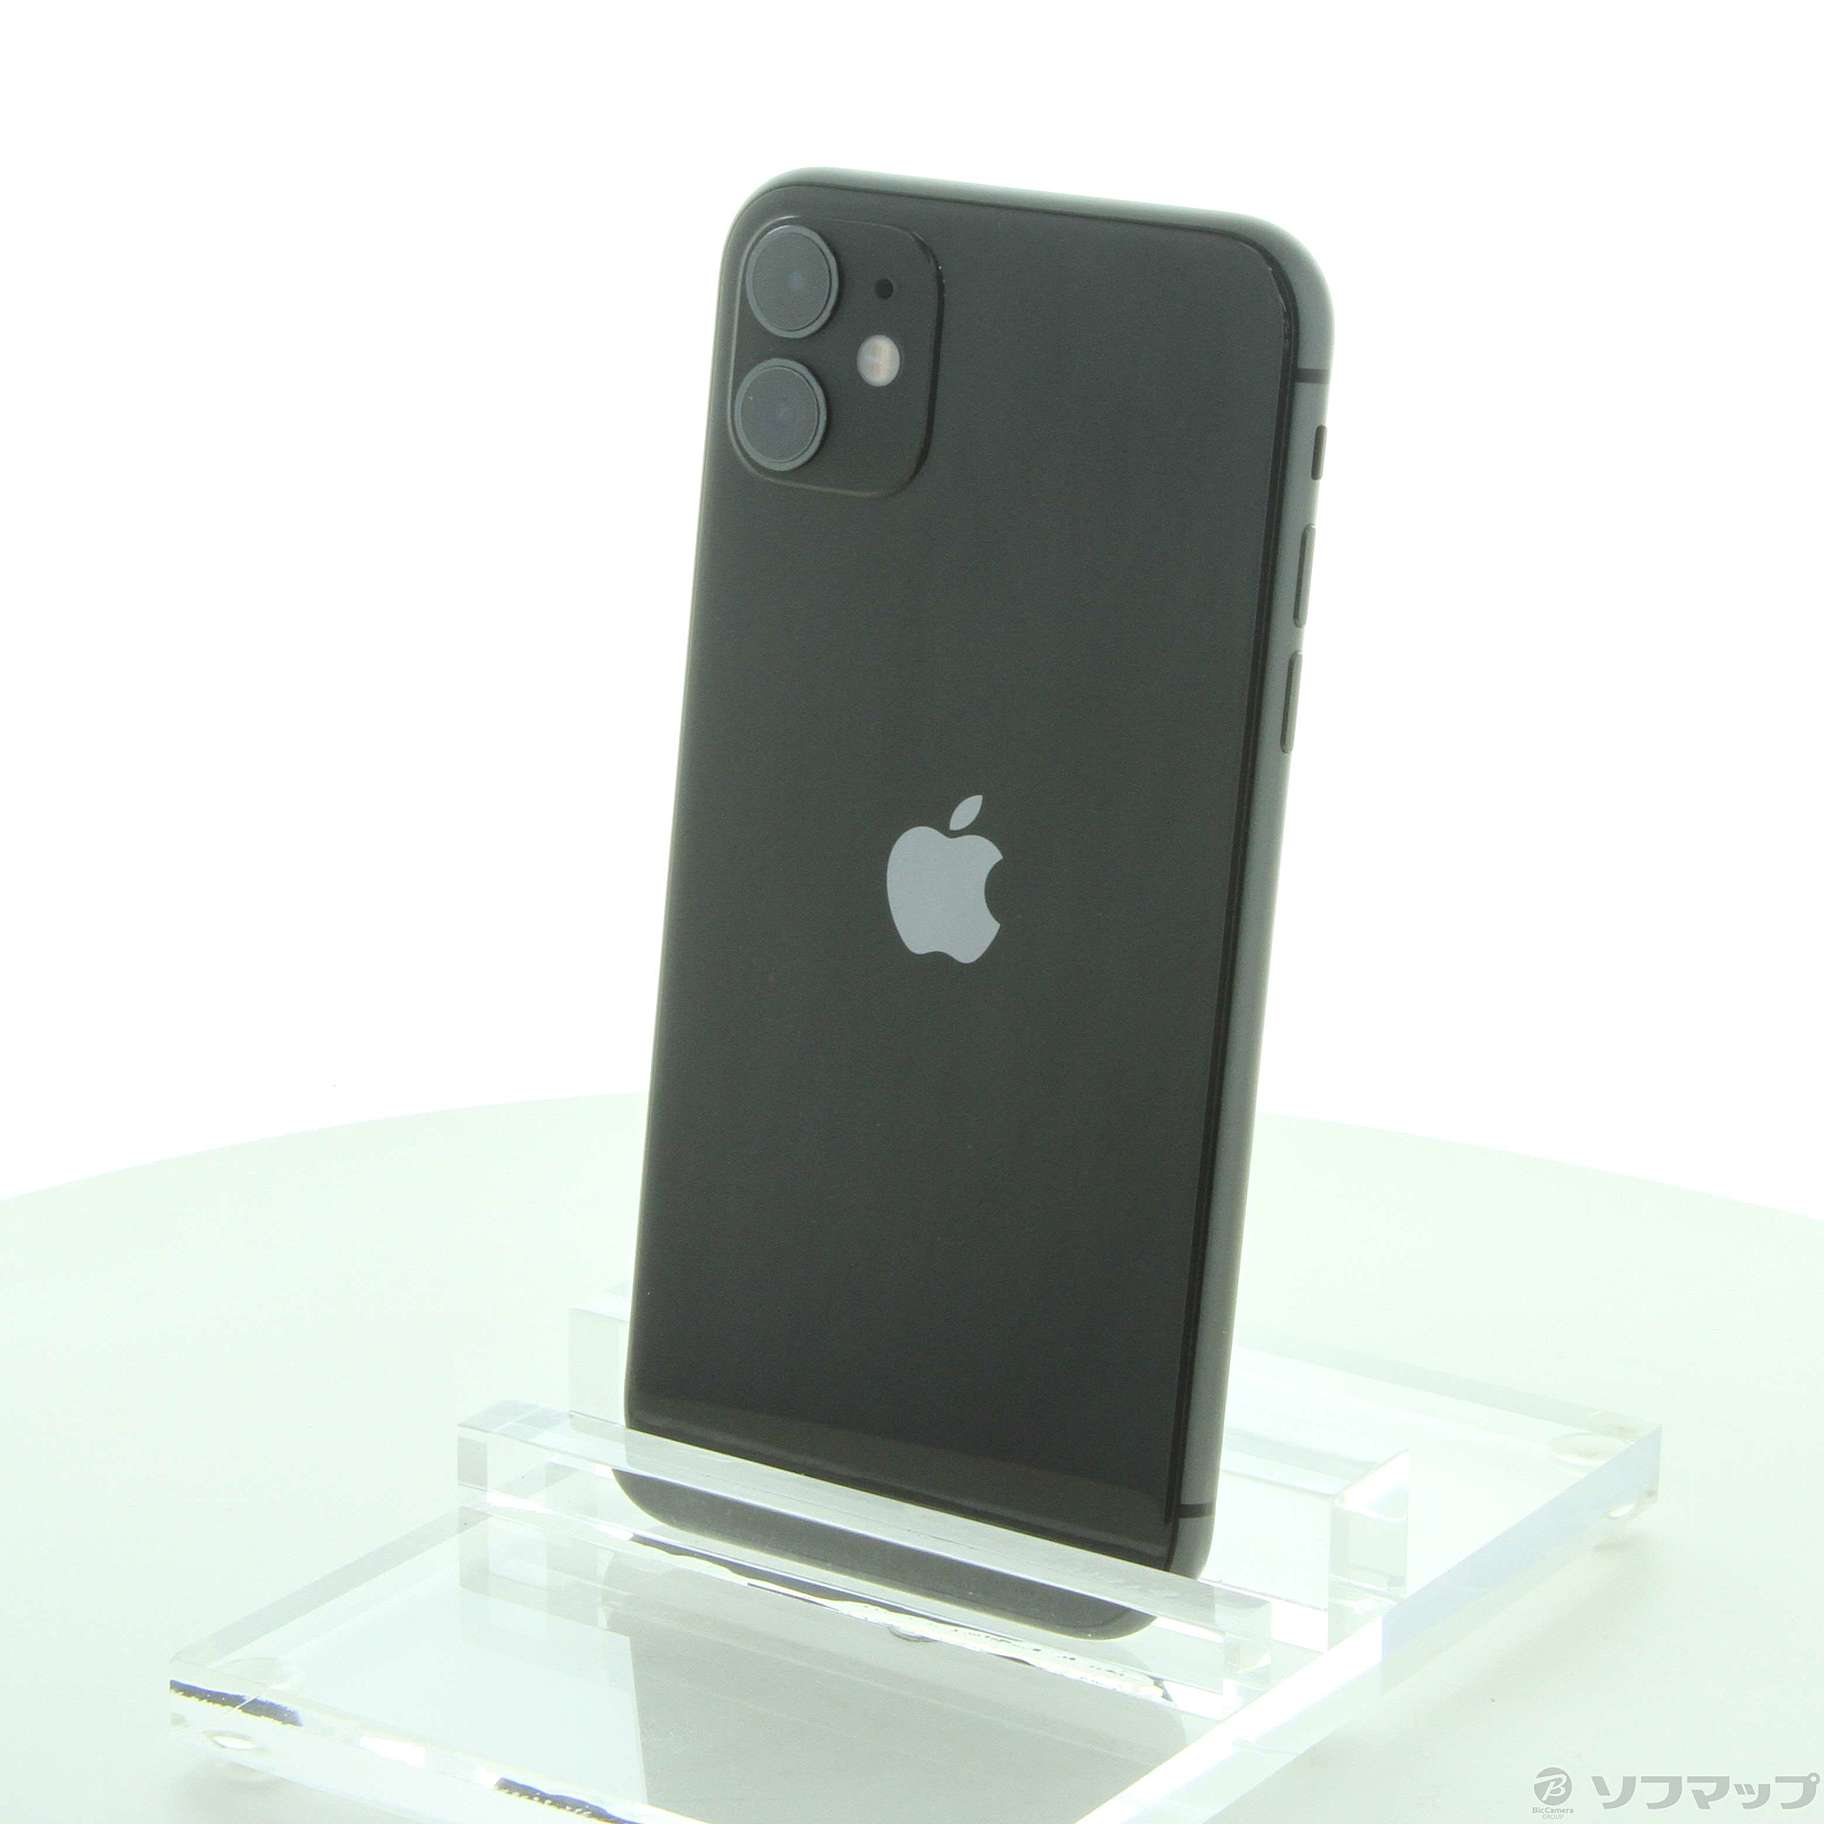 iPhone11 black 64G Softbank ほぼ新品